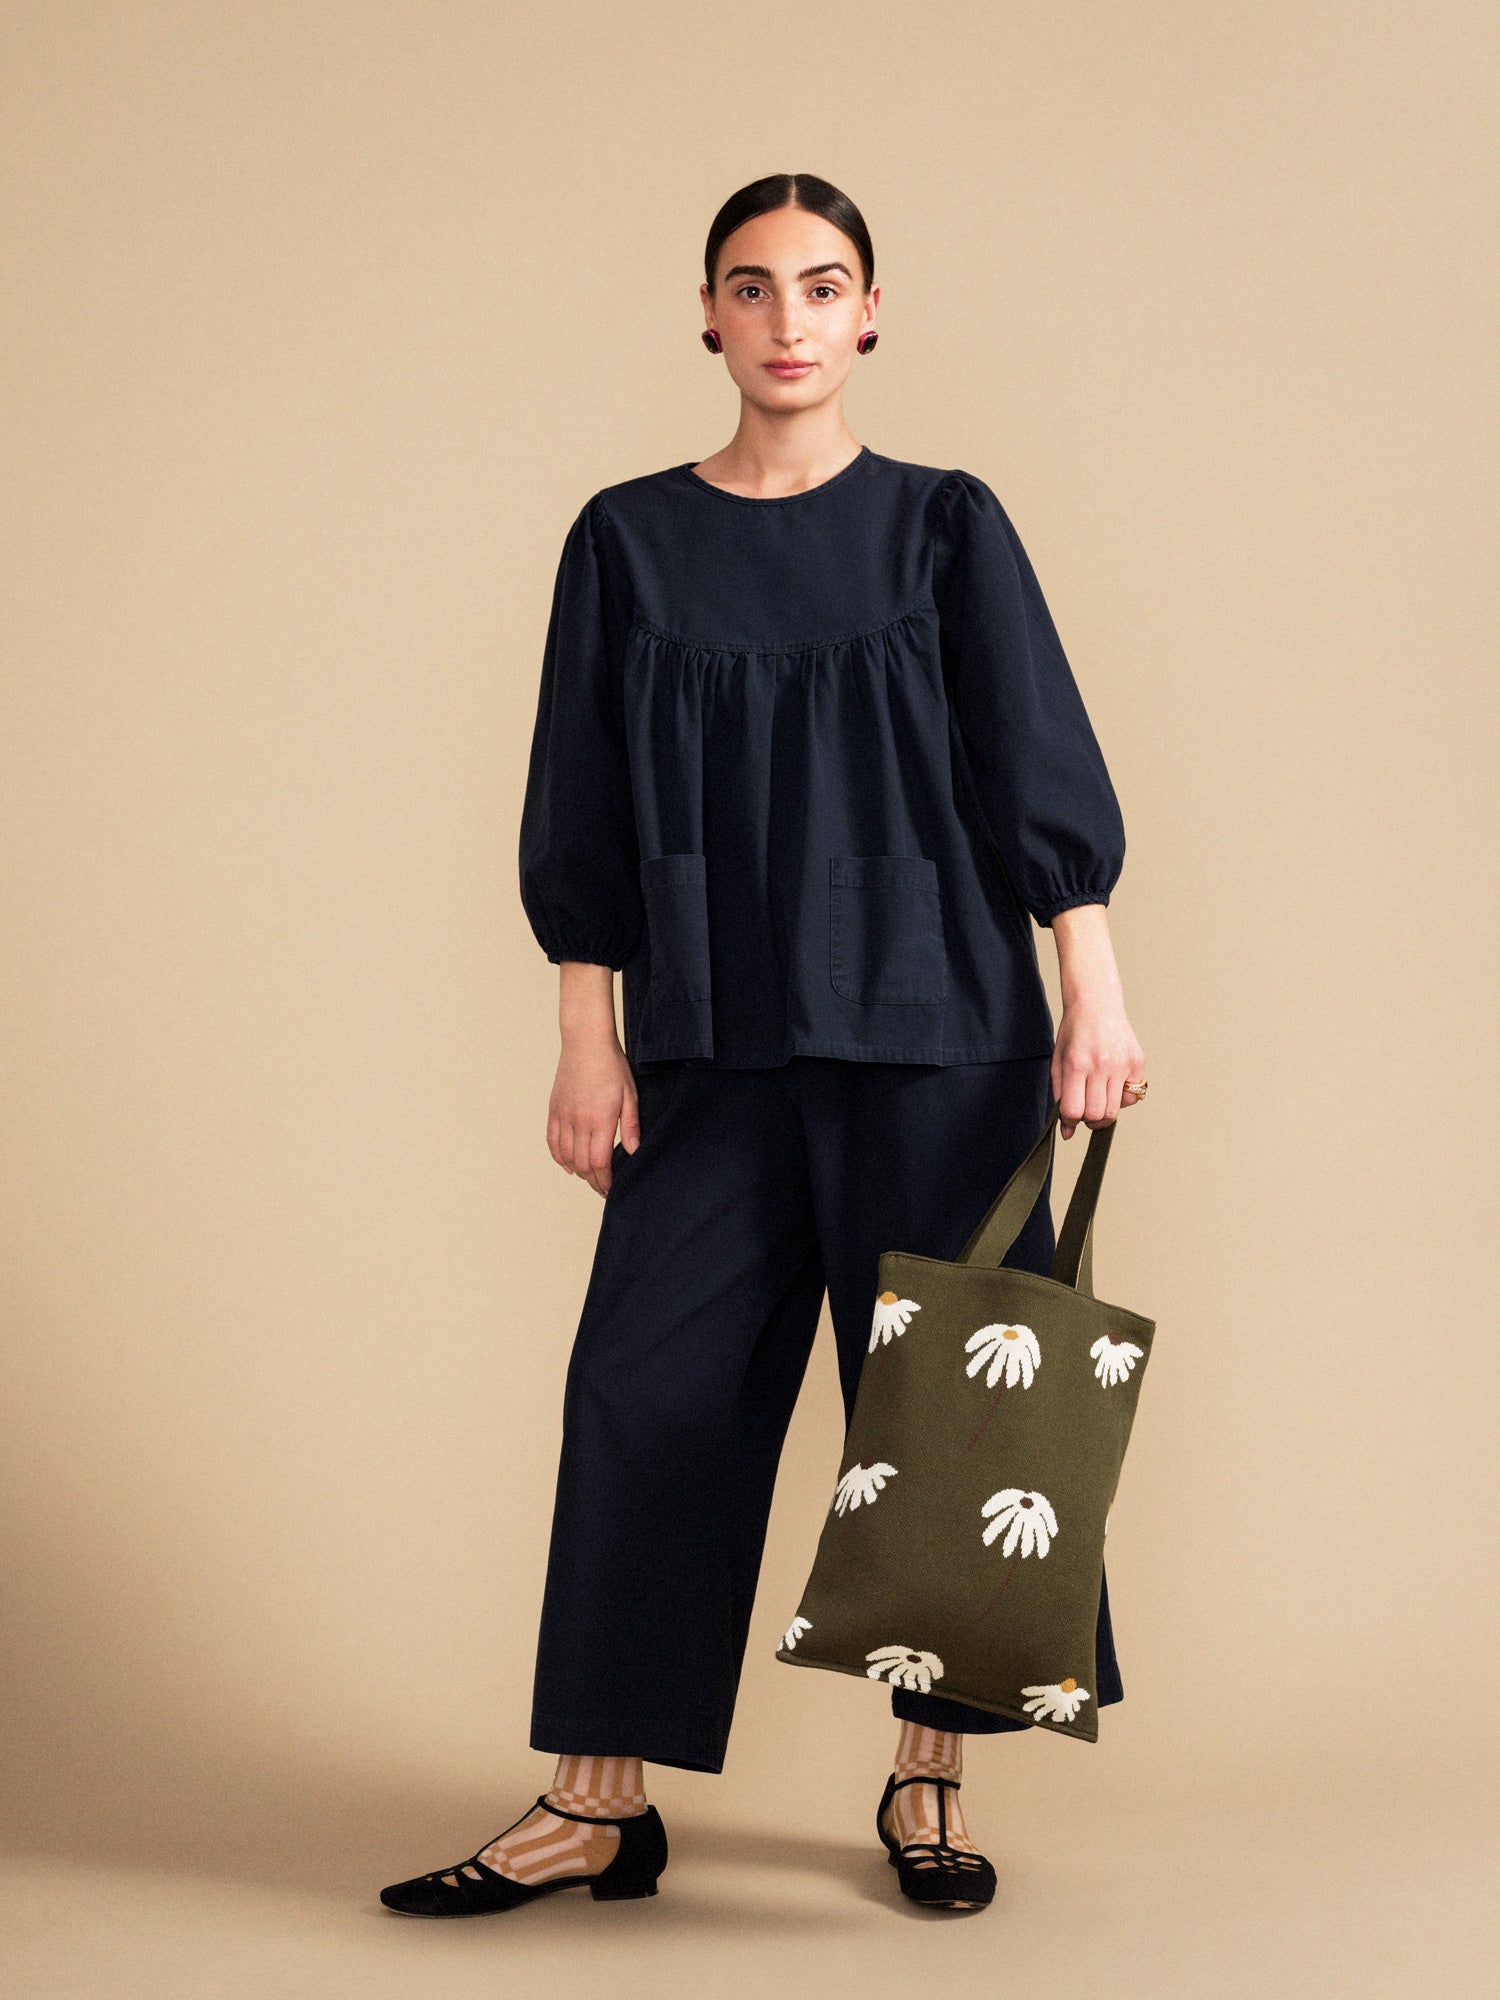 Buy Bimba y Lola Bags & Handbags online - Women - 144 products